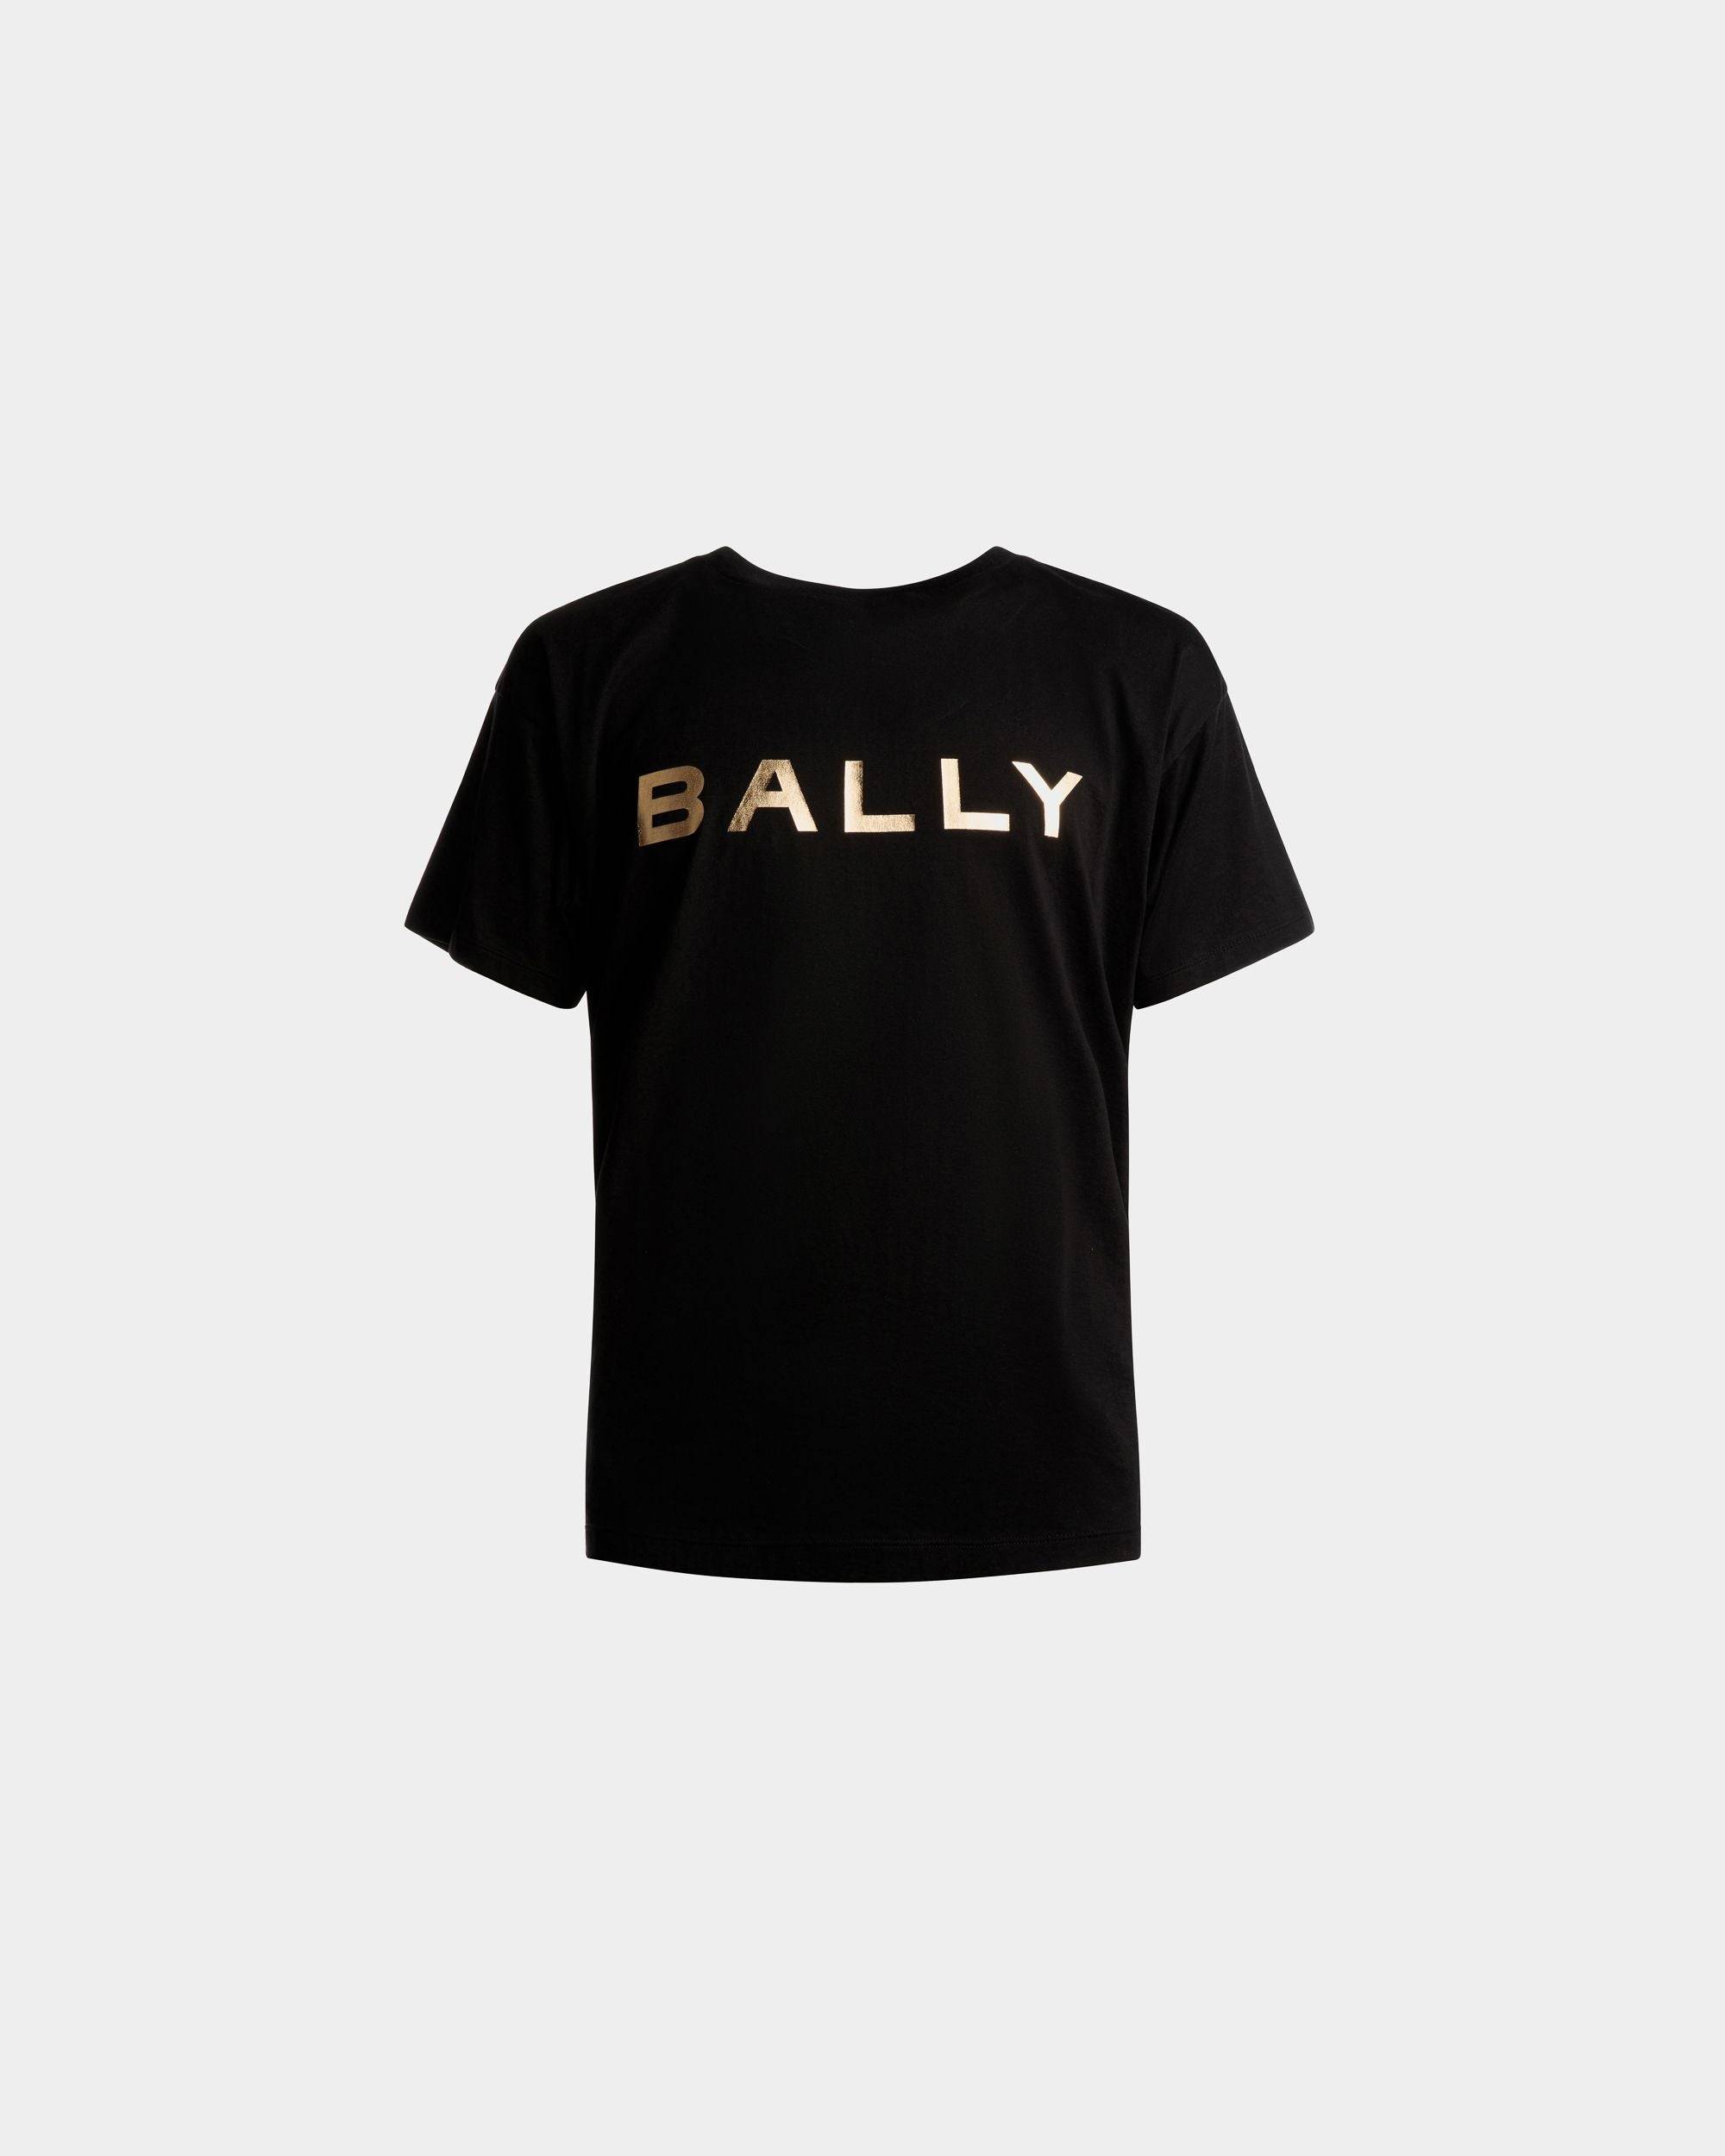 Logo T-Shirt | Men's T-Shirt | Black Cotton | Bally | Still Life Front